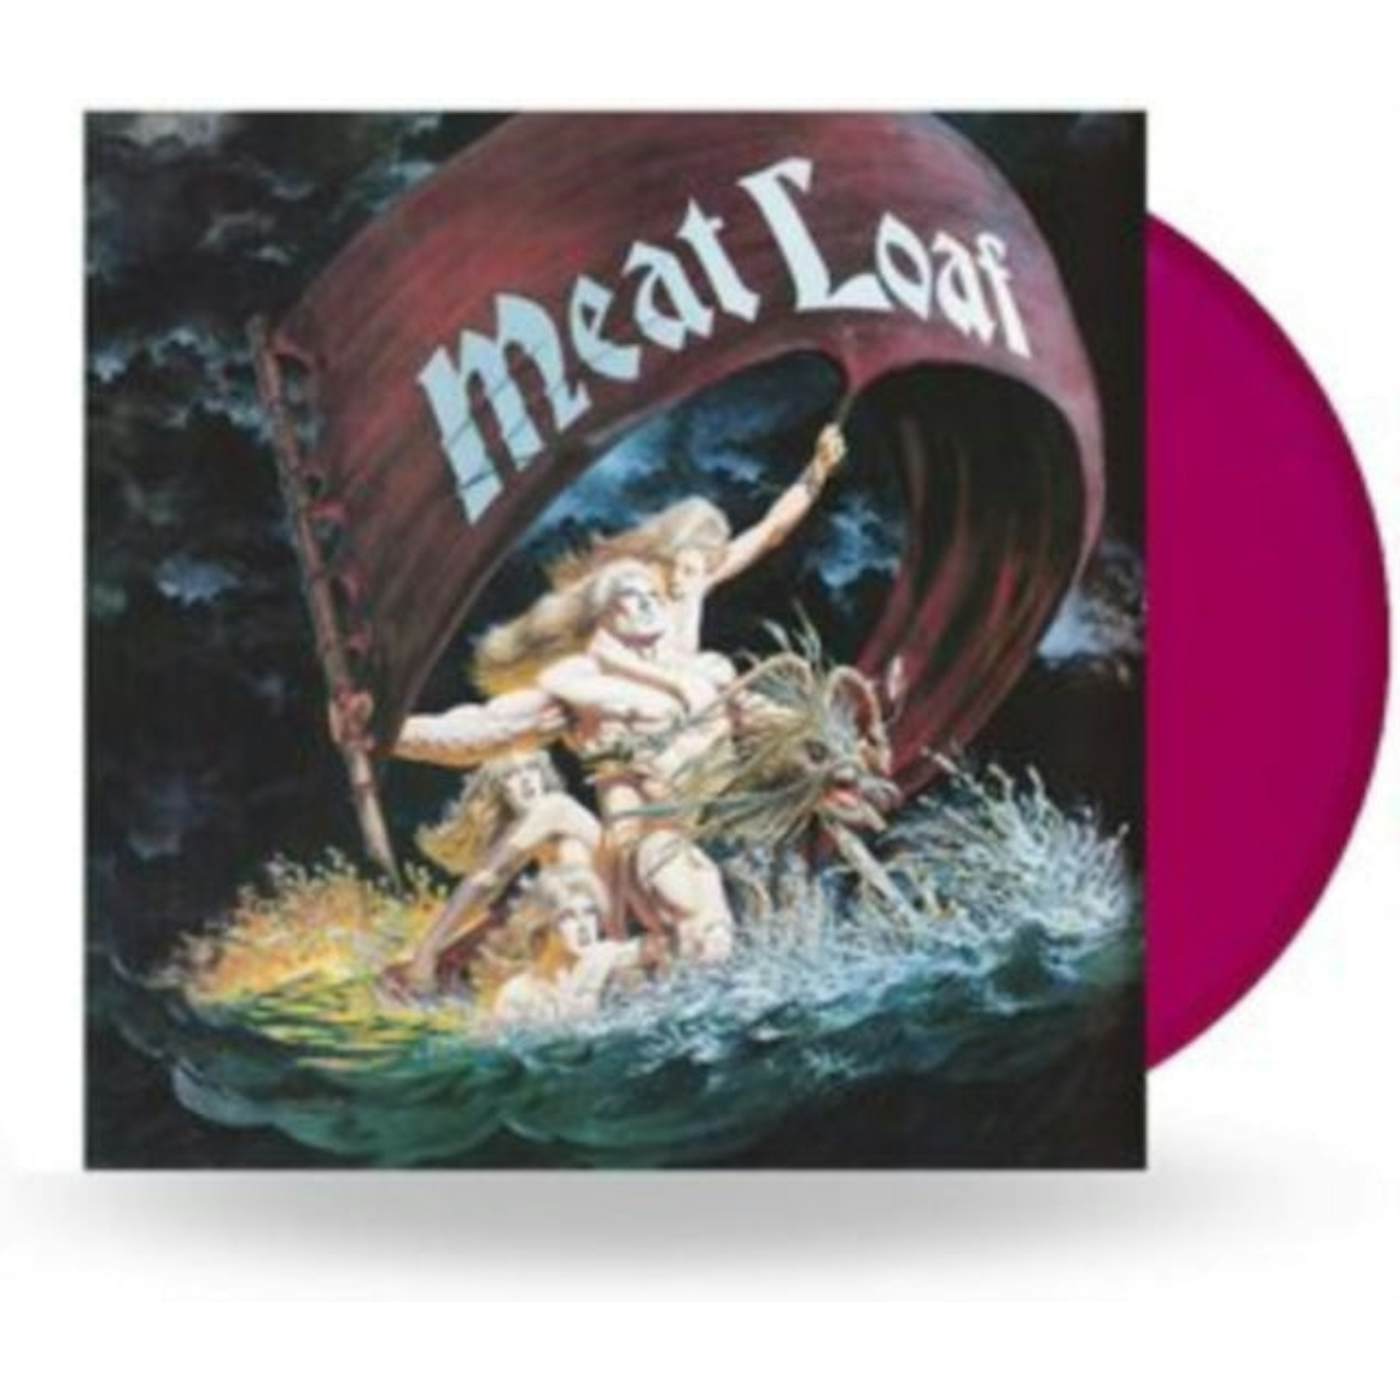 Meat Loaf LP Vinyl Record - Dead Ringer (Dark Red Vinyl)